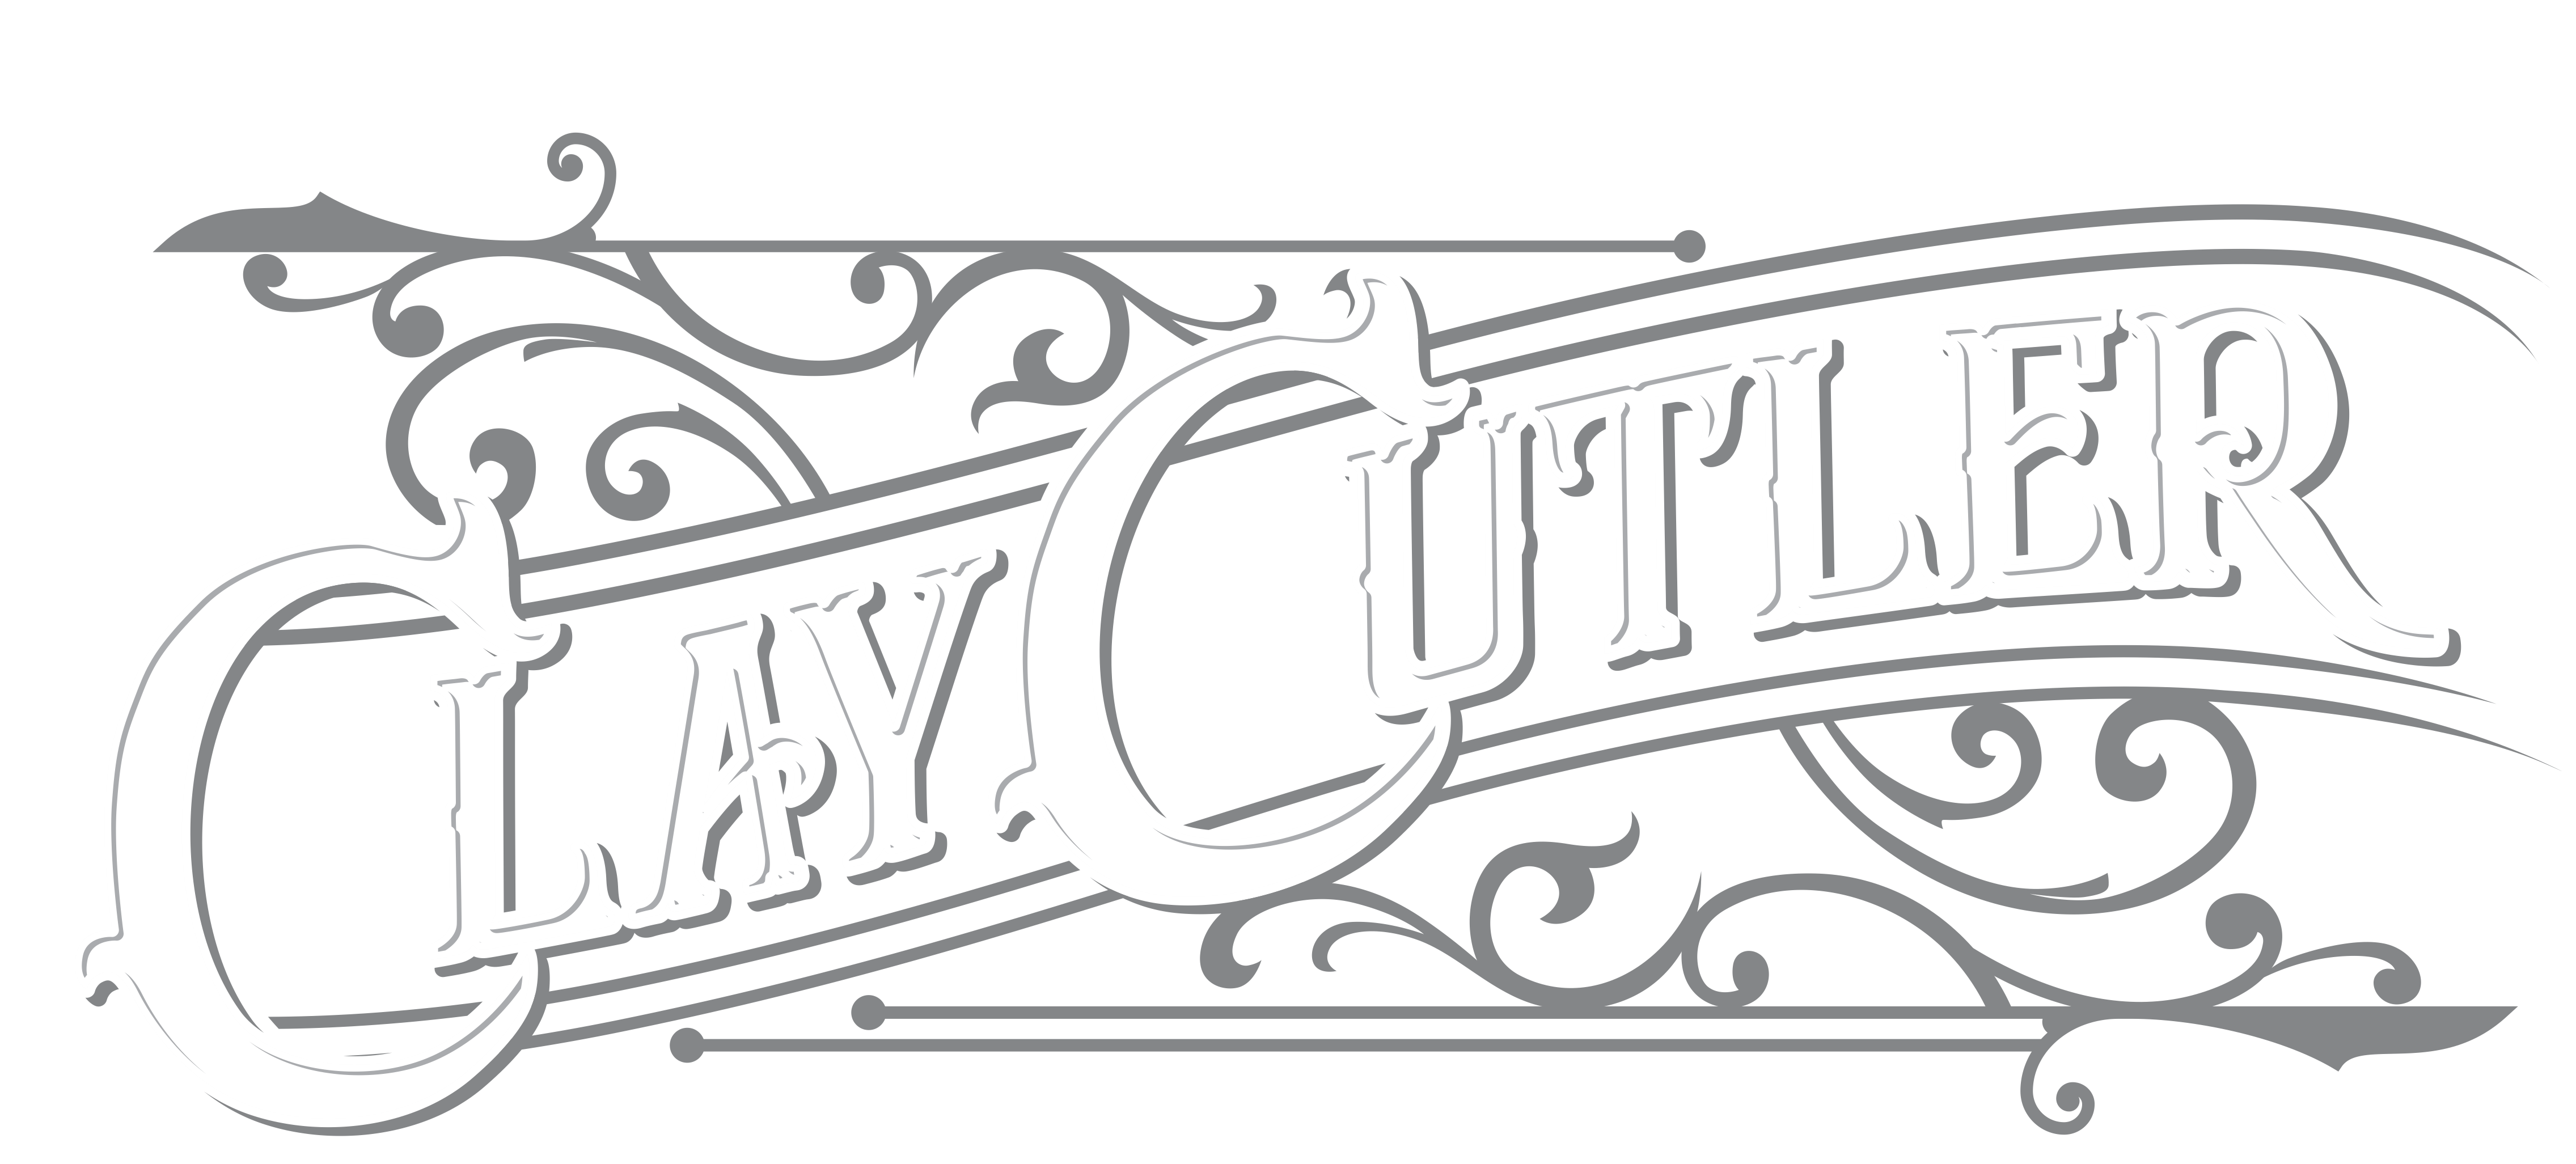 Clay Cutler